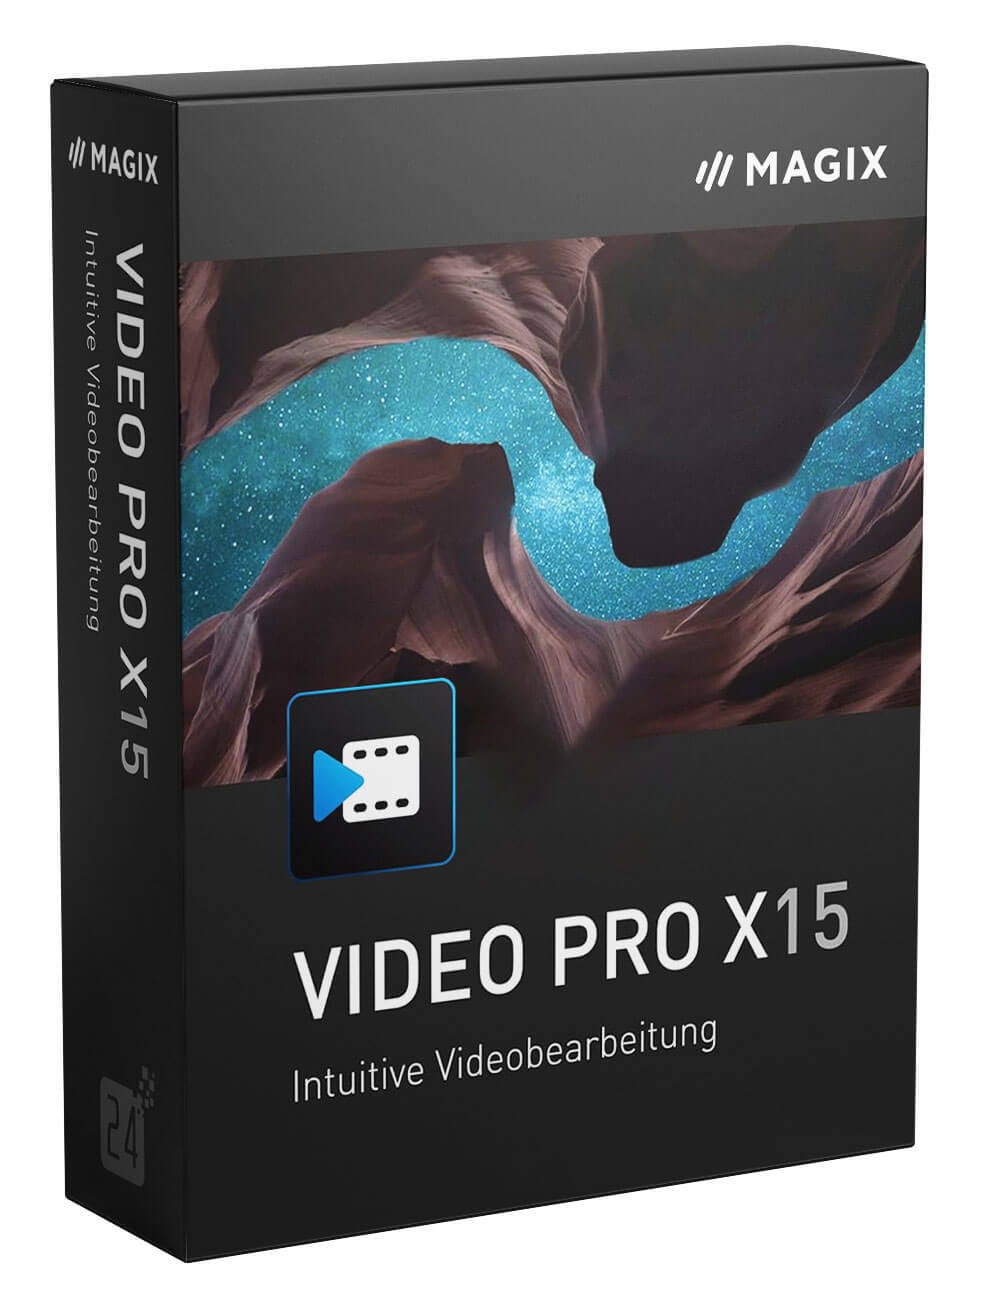 MAGIX Video Pro X15 v21.0.1.205 instal the last version for apple